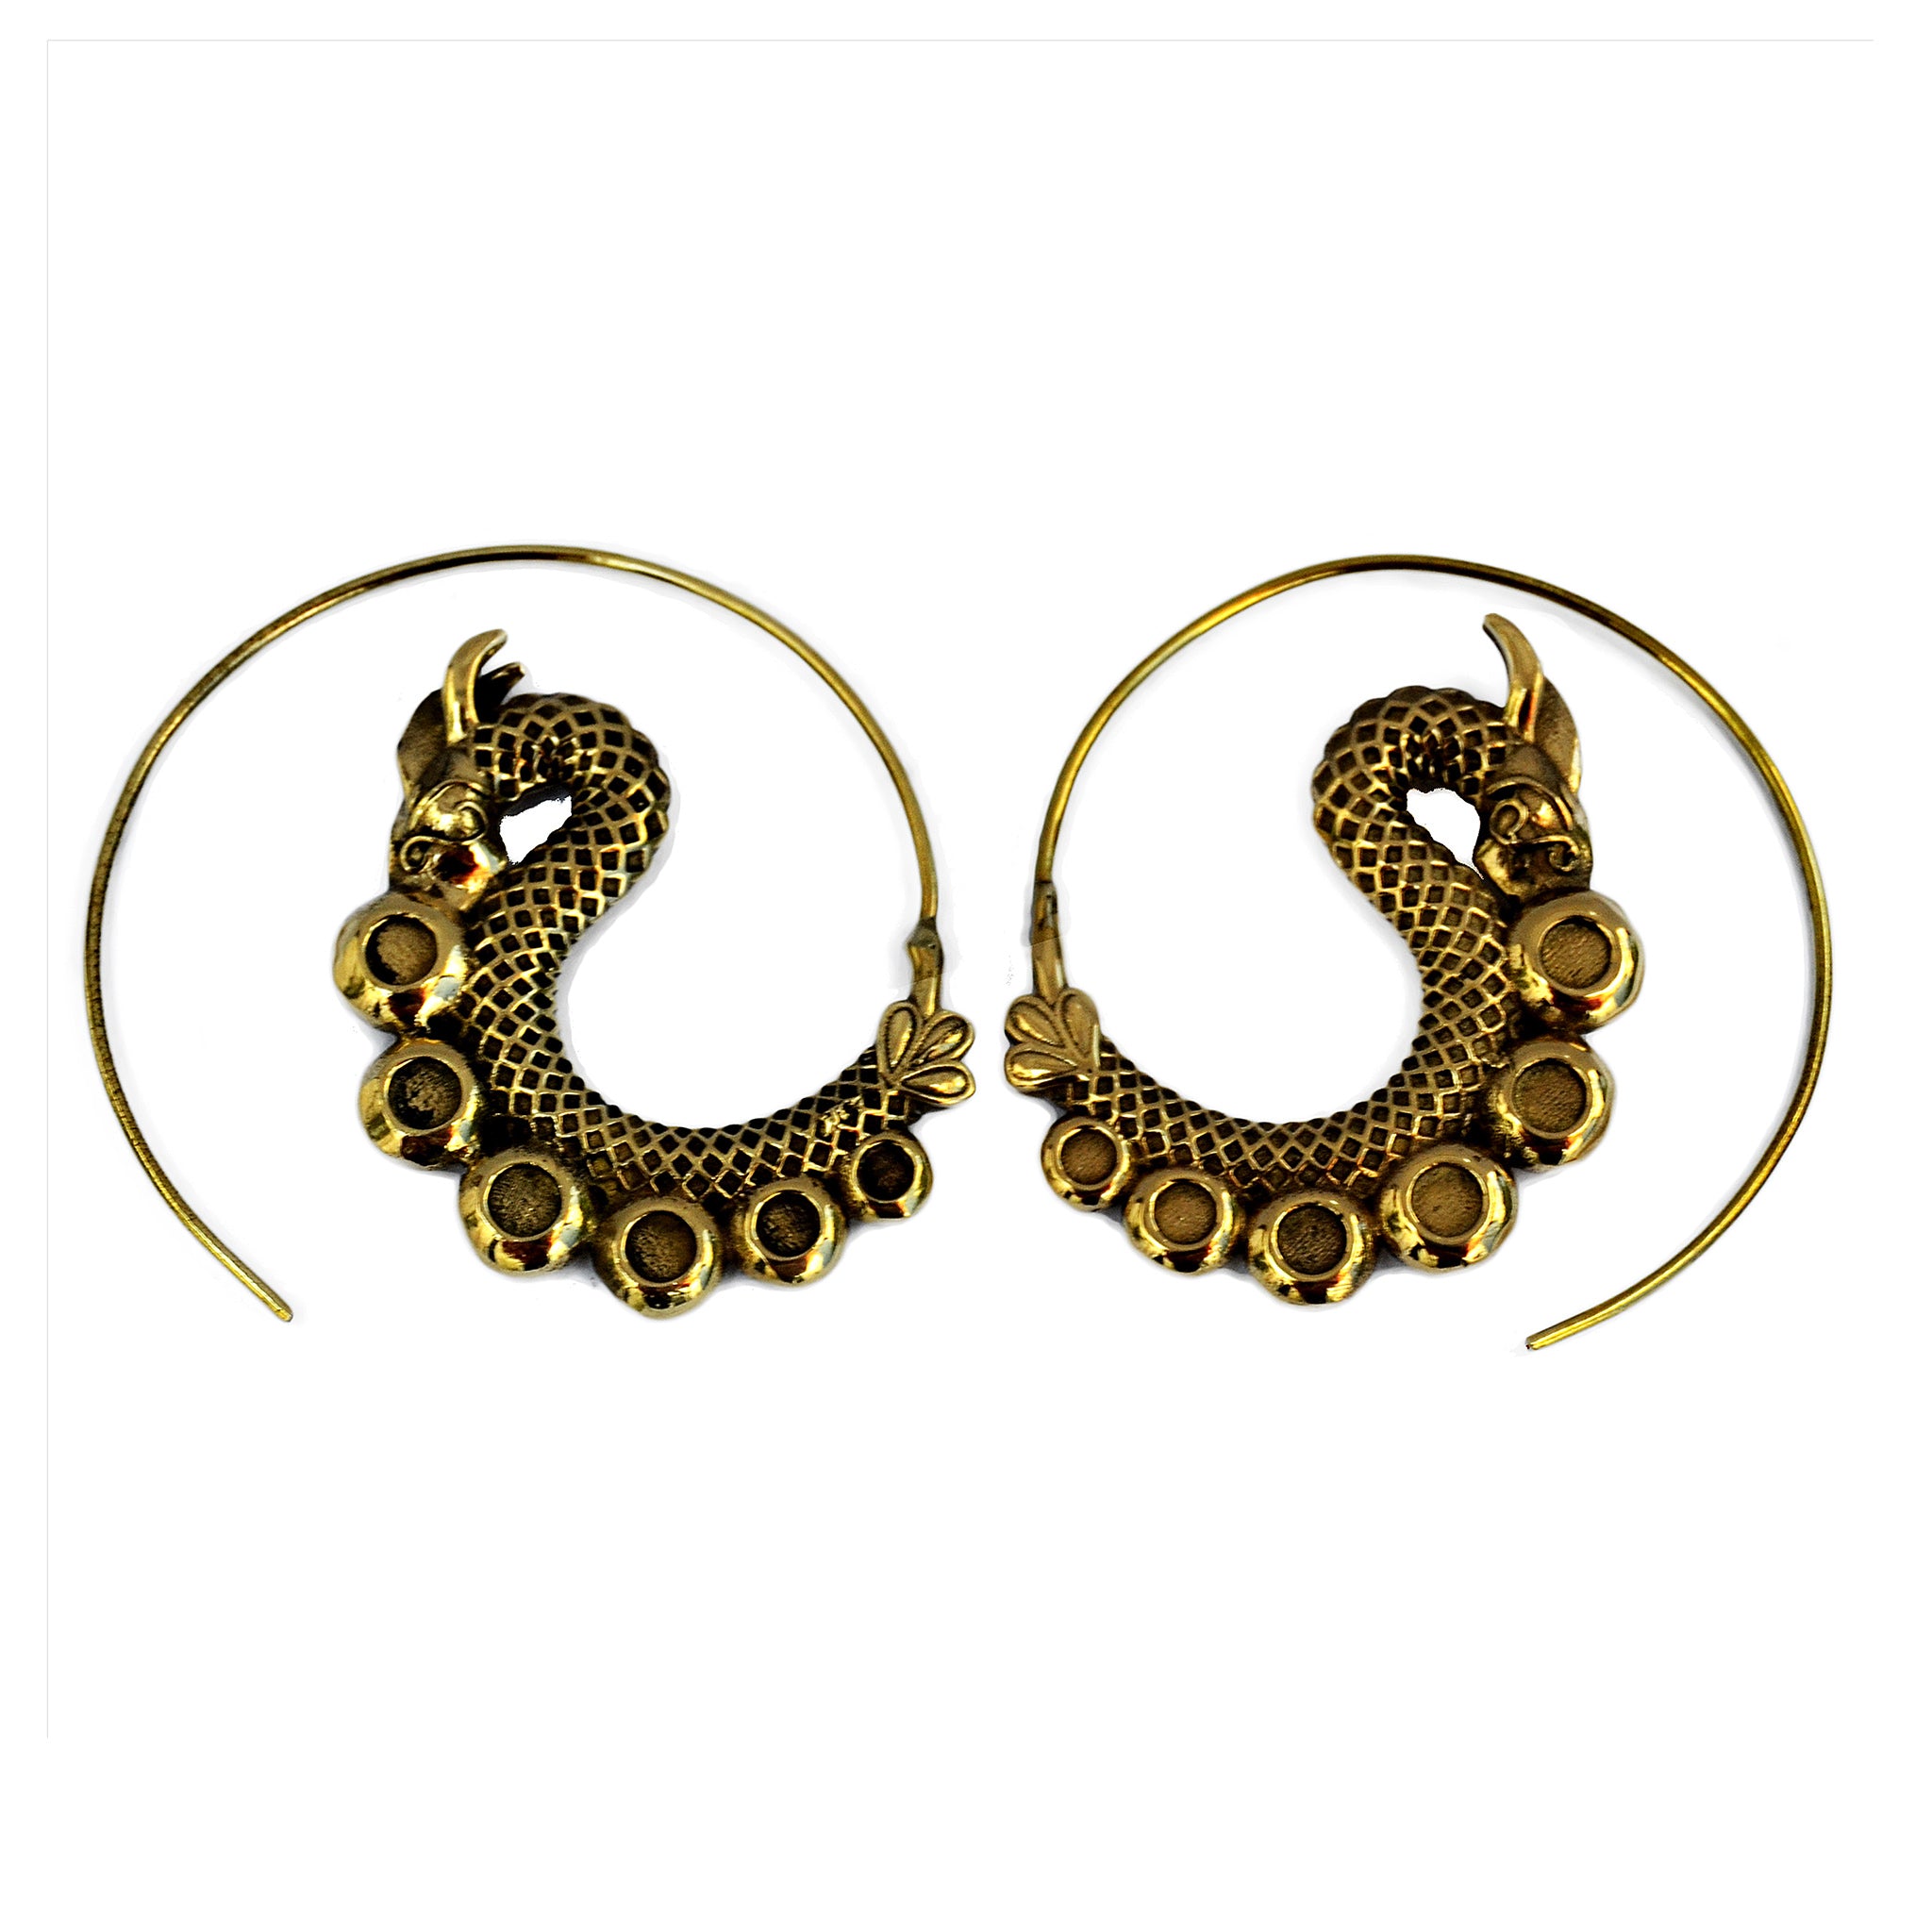 Brass dragon spiral hoop earrings on white background